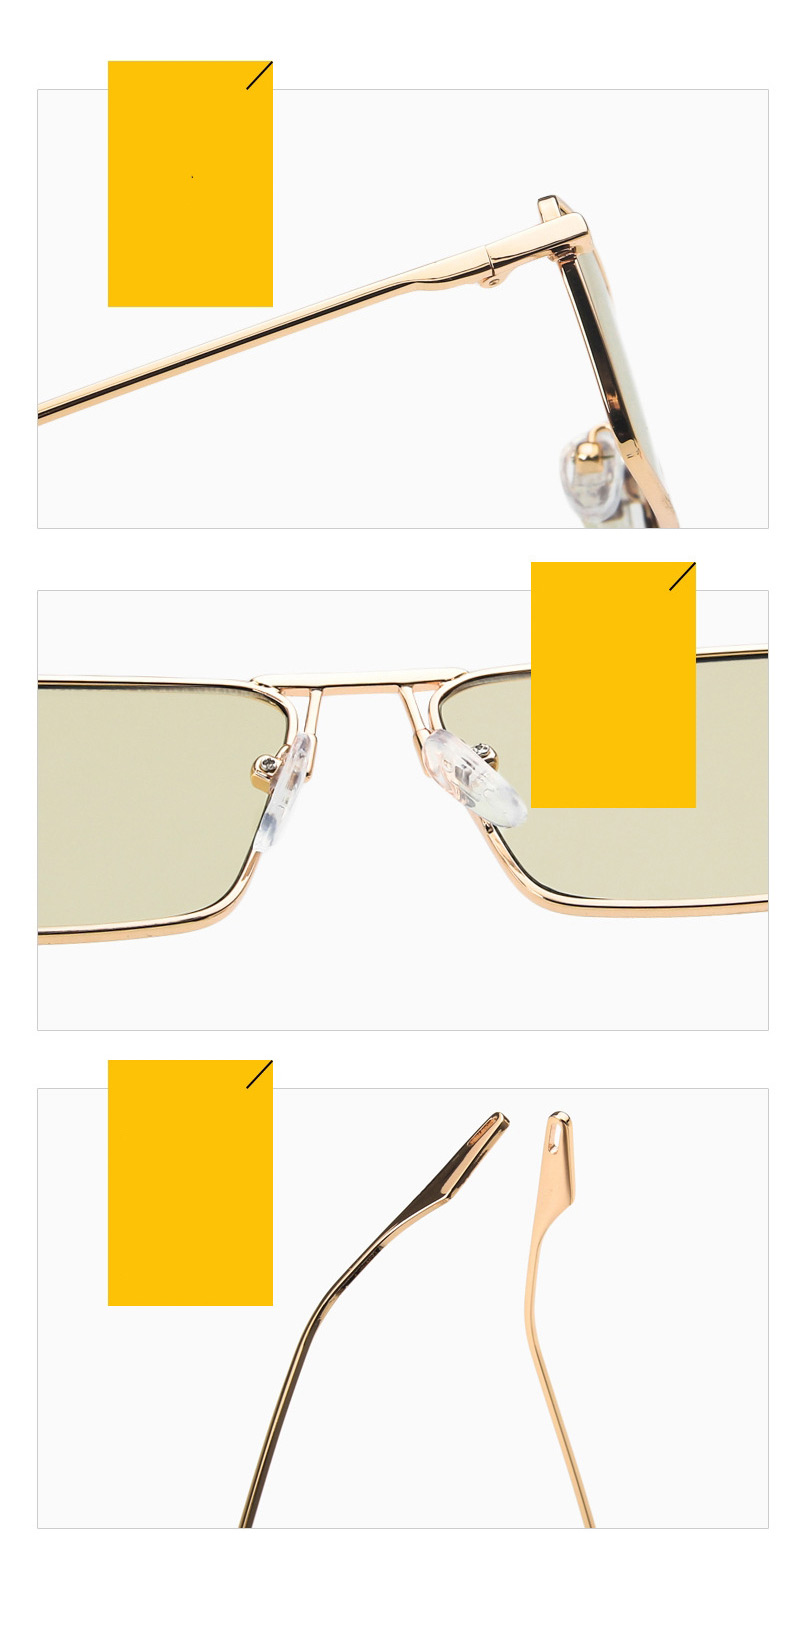 Fashion Black Frame Gray Piece Metal Small Frame Uv Protection Sunglasses,Women Sunglasses